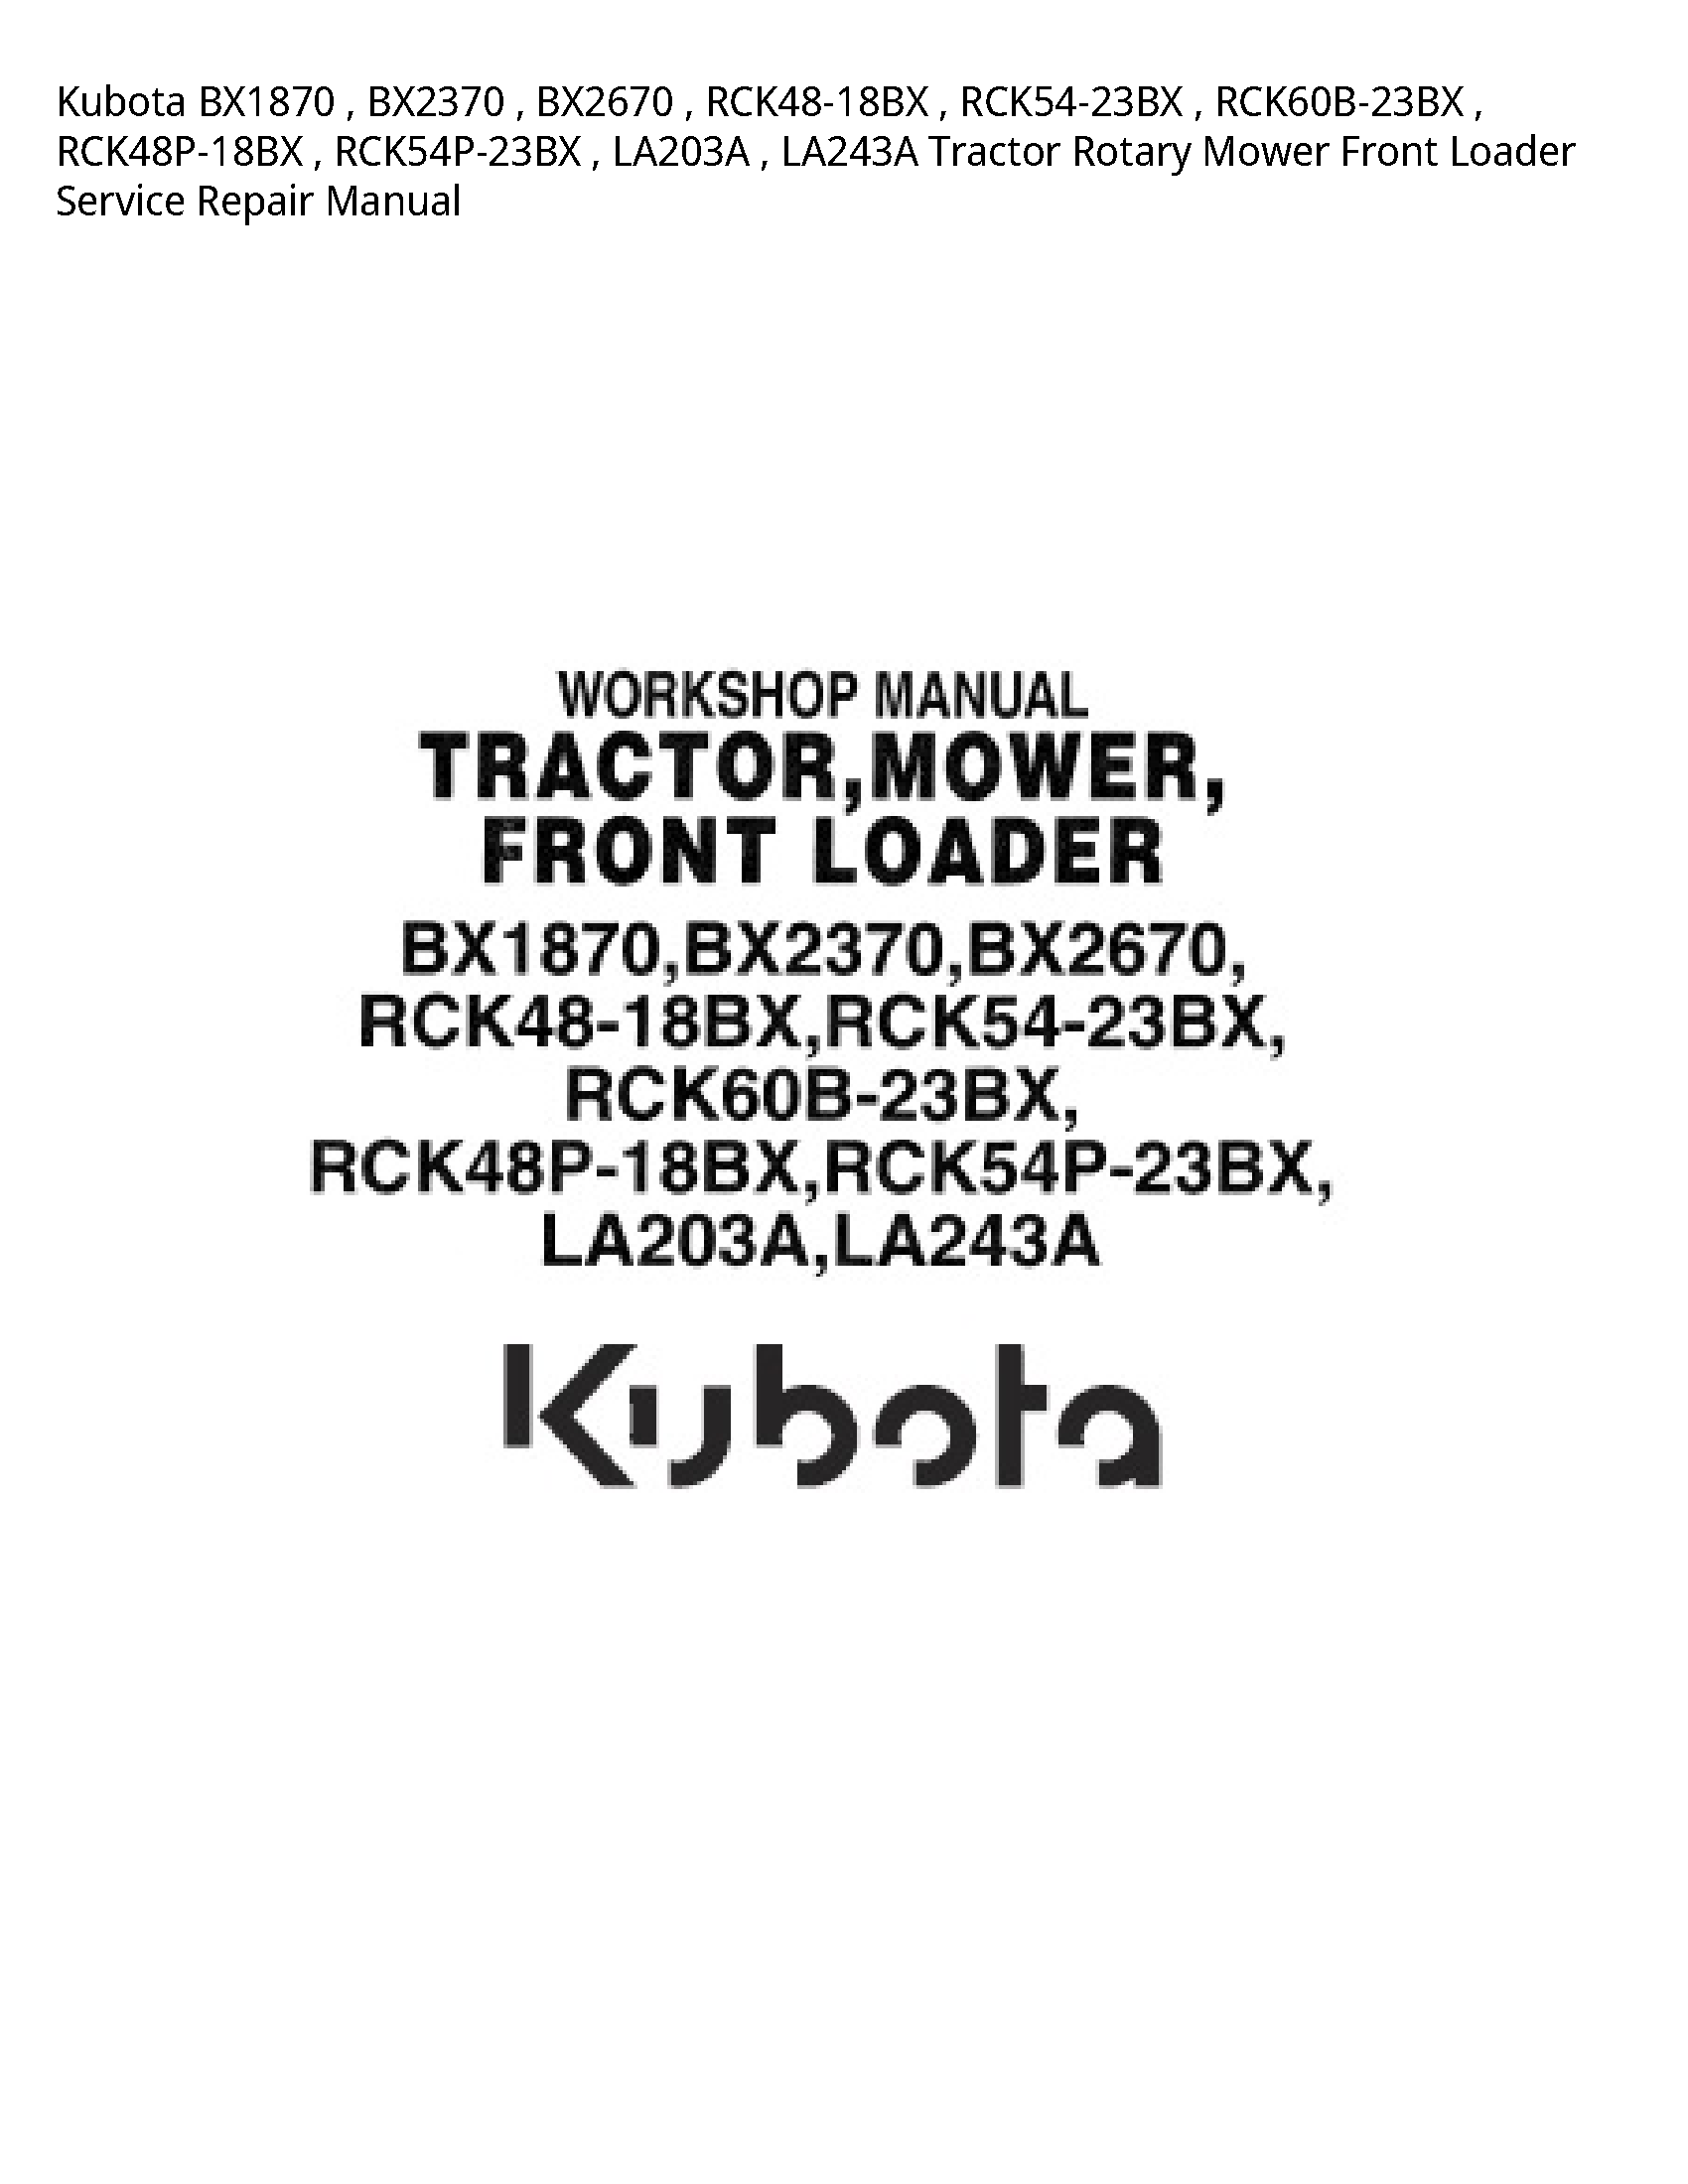 Kubota BX1870 Tractor Rotary Mower Front Loader manual